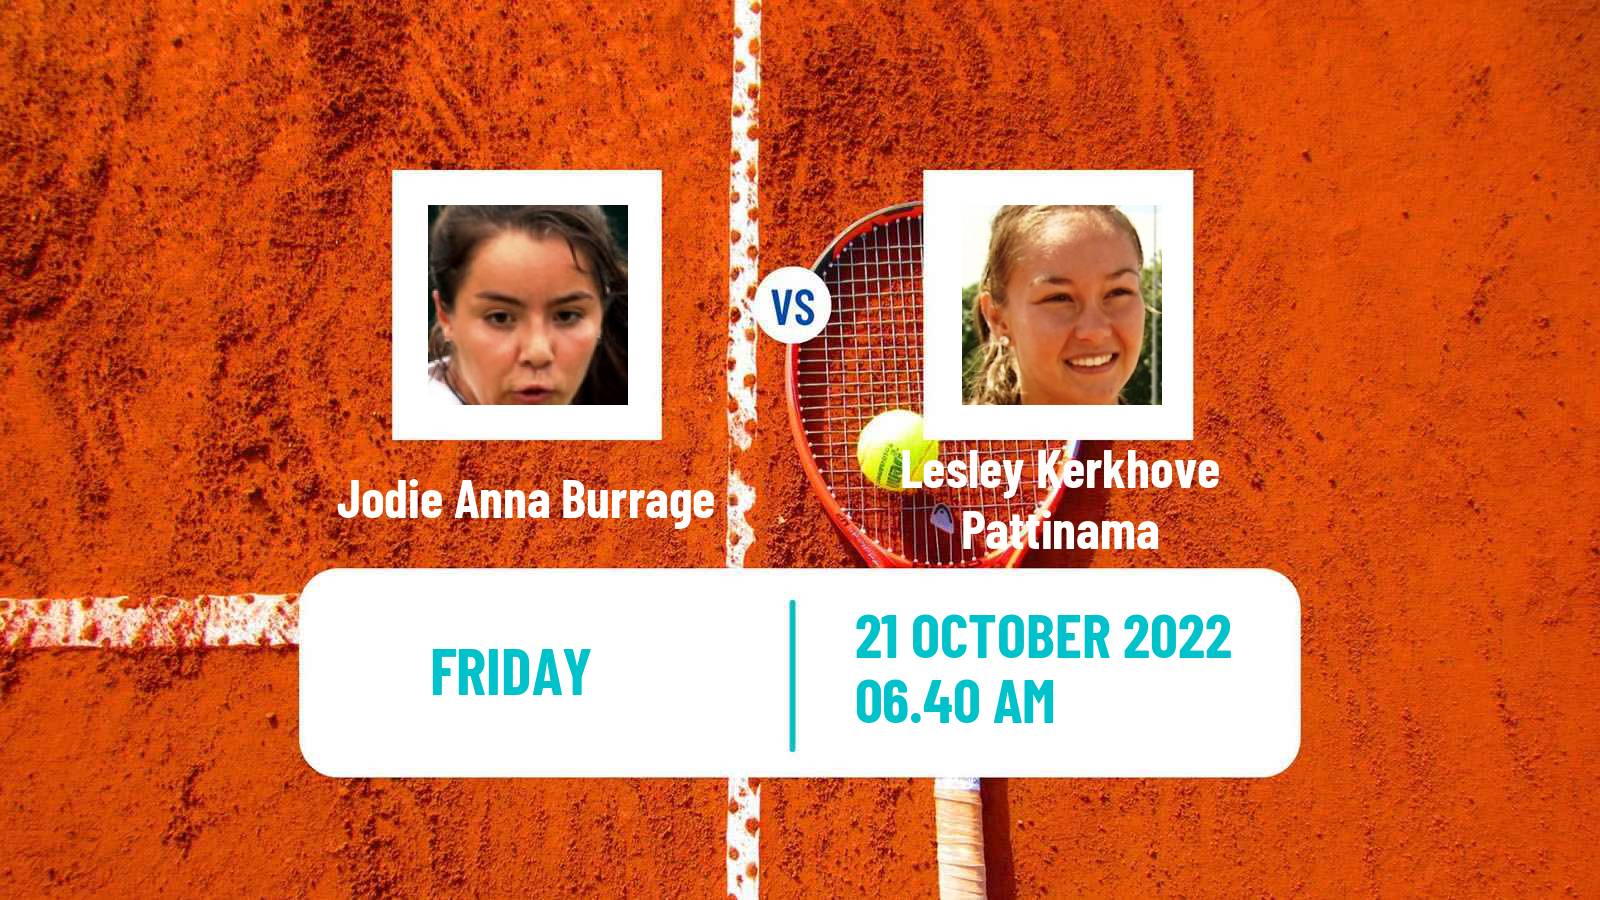 Tennis ITF Tournaments Jodie Anna Burrage - Lesley Kerkhove Pattinama